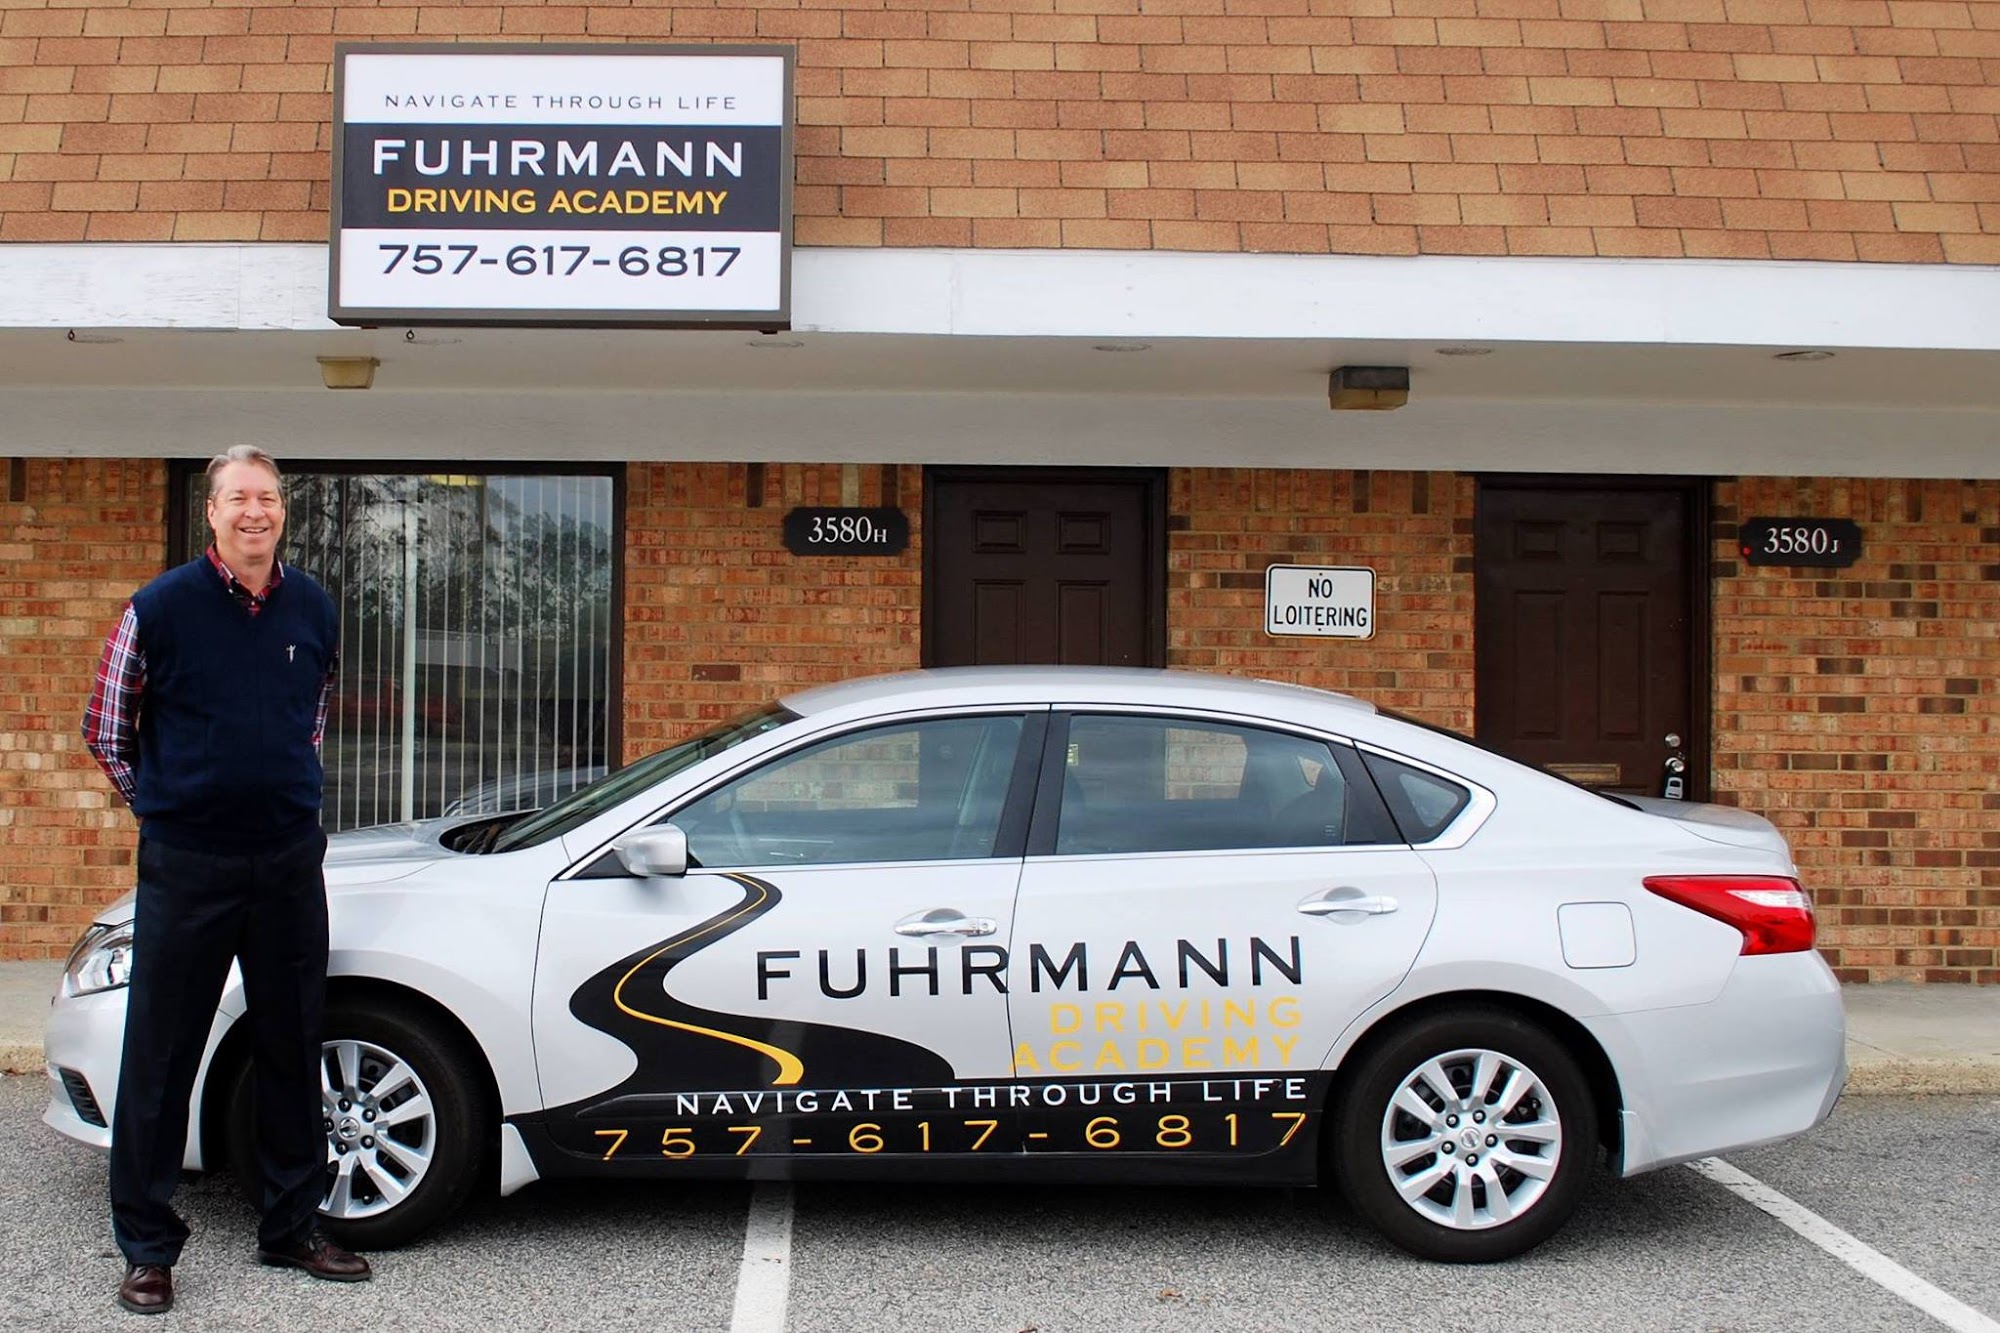 Fuhrmann Driving Academy